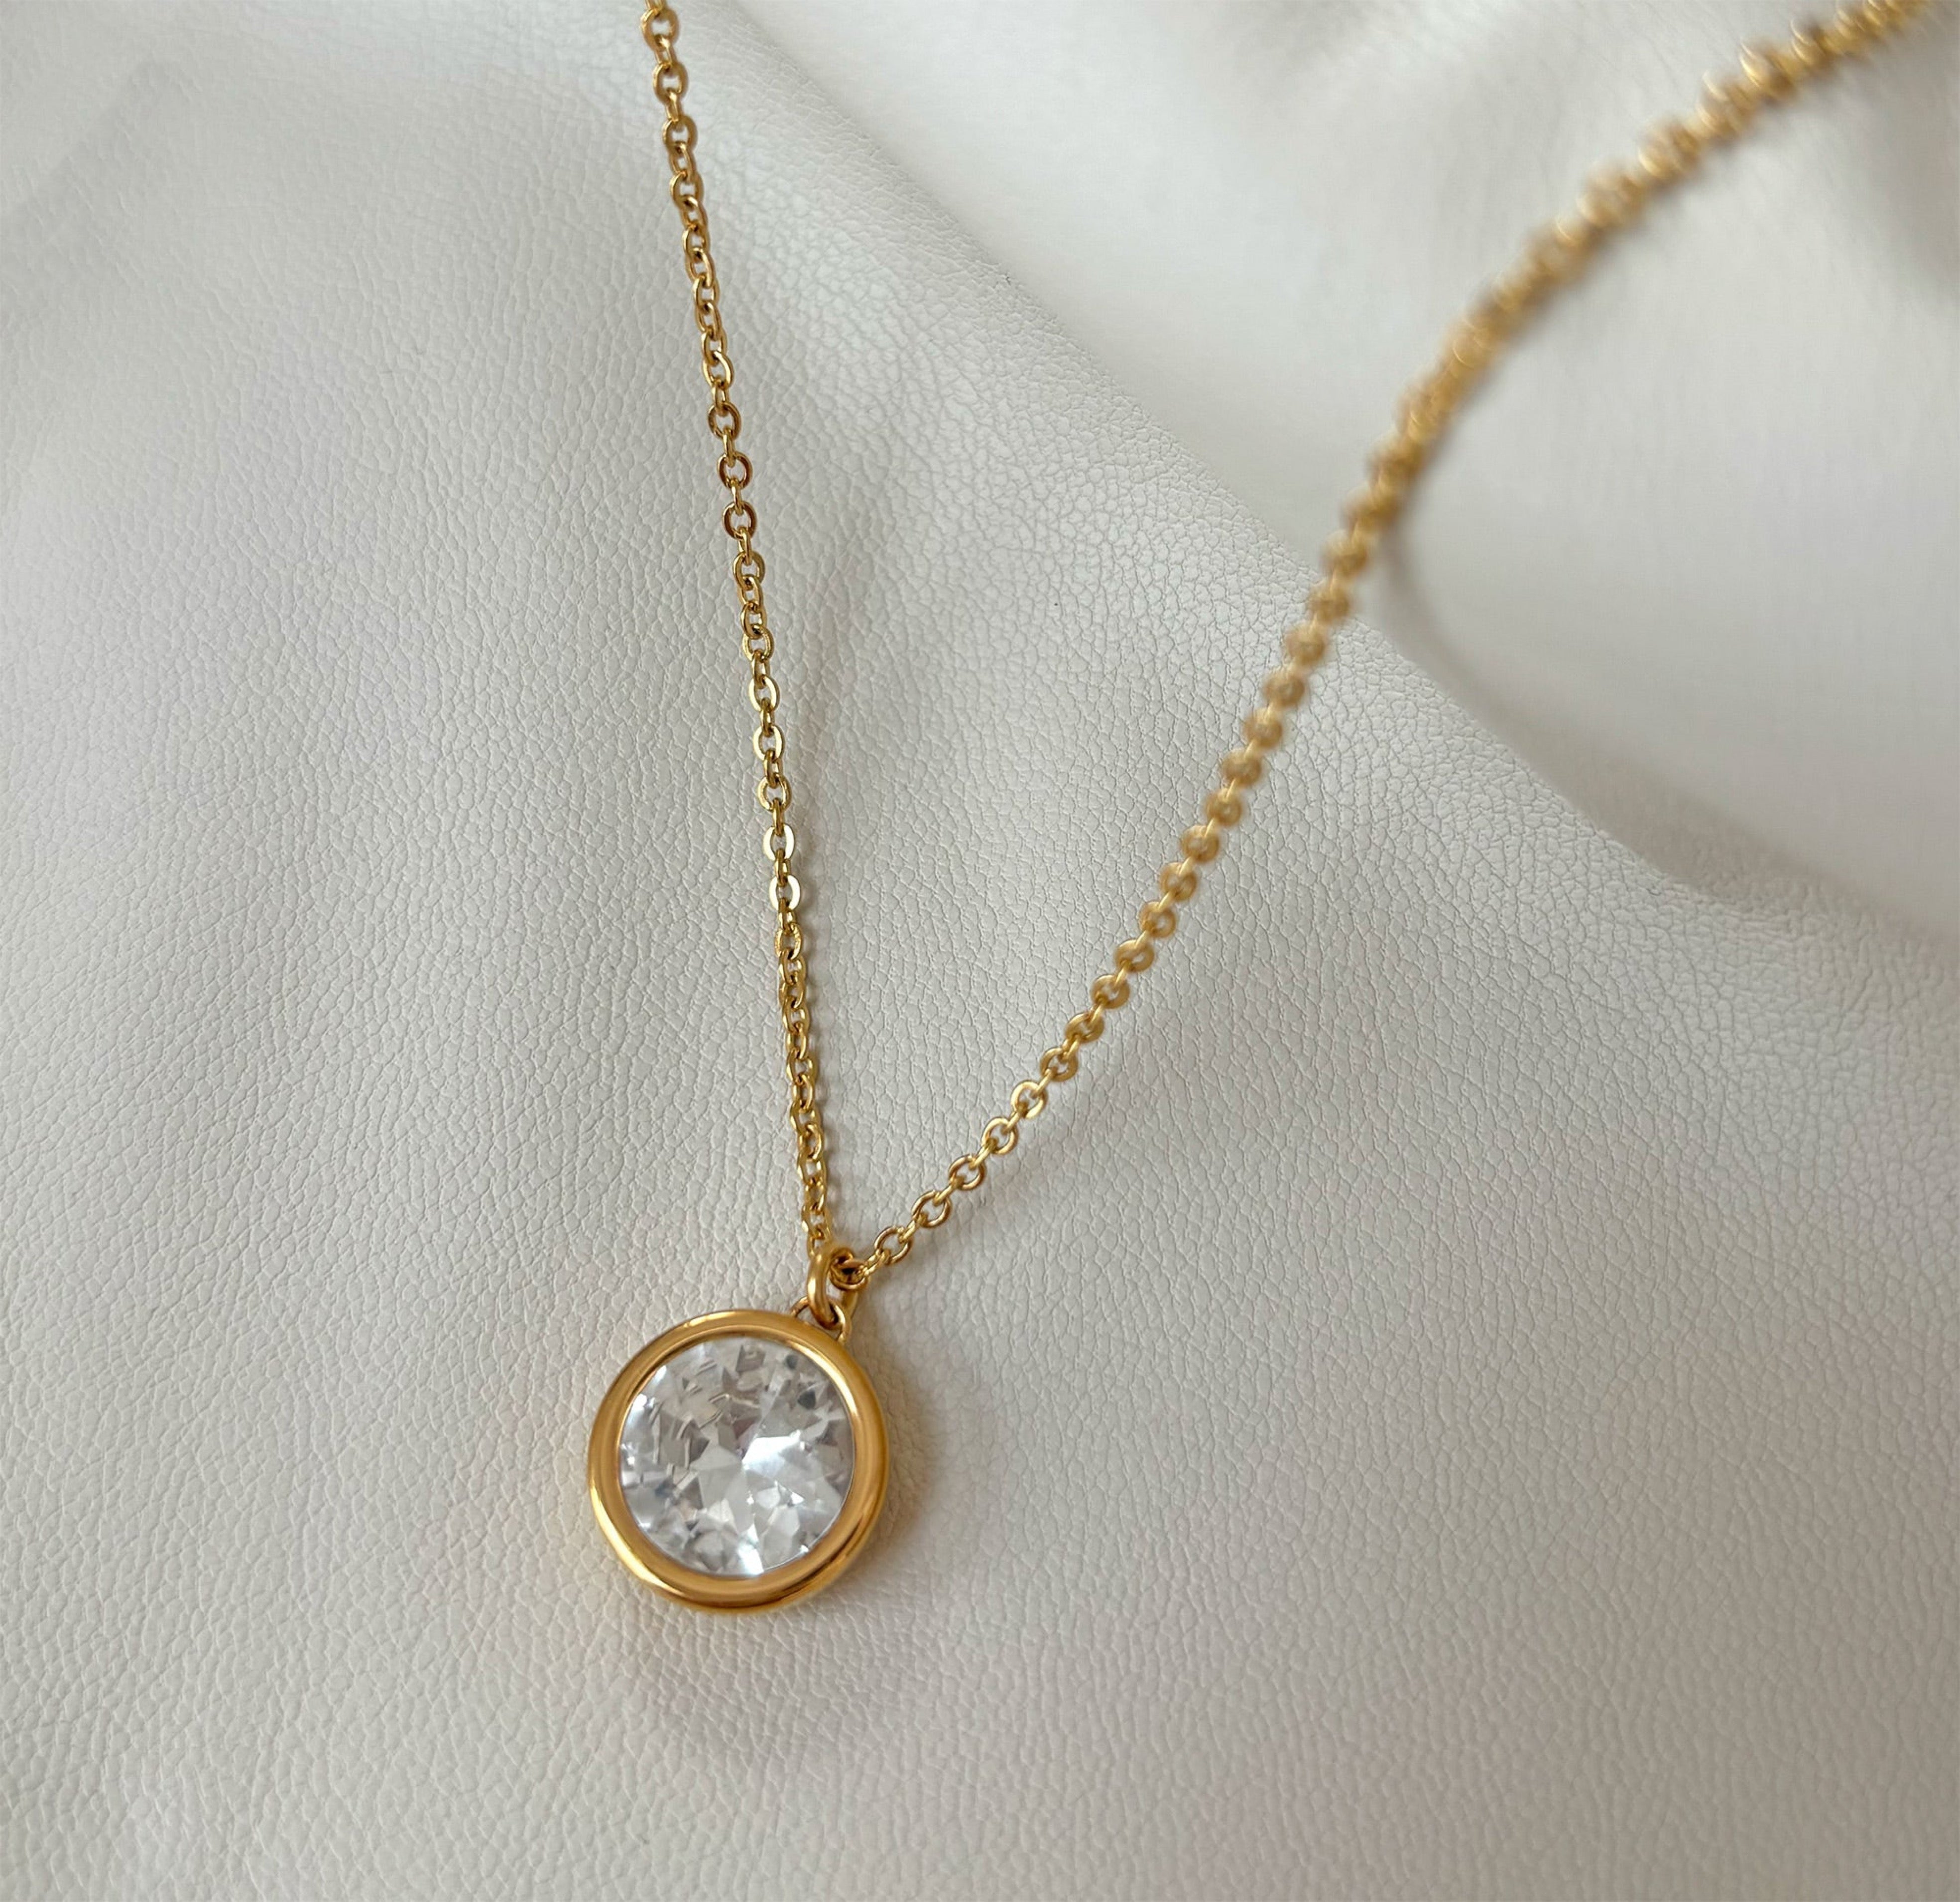 white stone pendant necklace waterproof jewelry